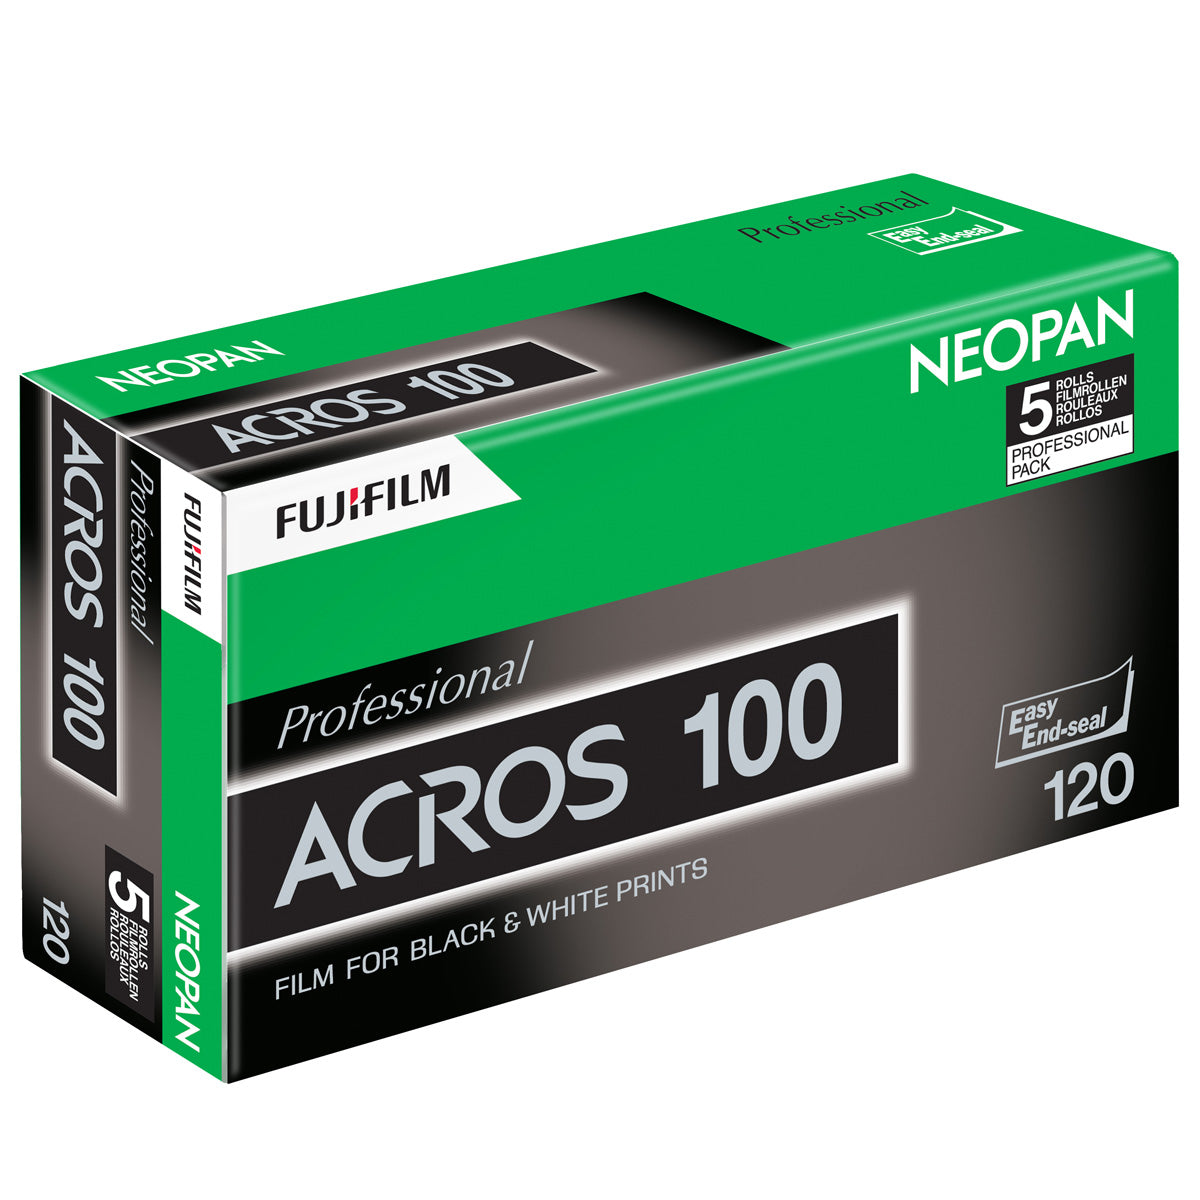 Fujifilm Neopan 100 120 Acros Black and White Negative Film (One Roll)